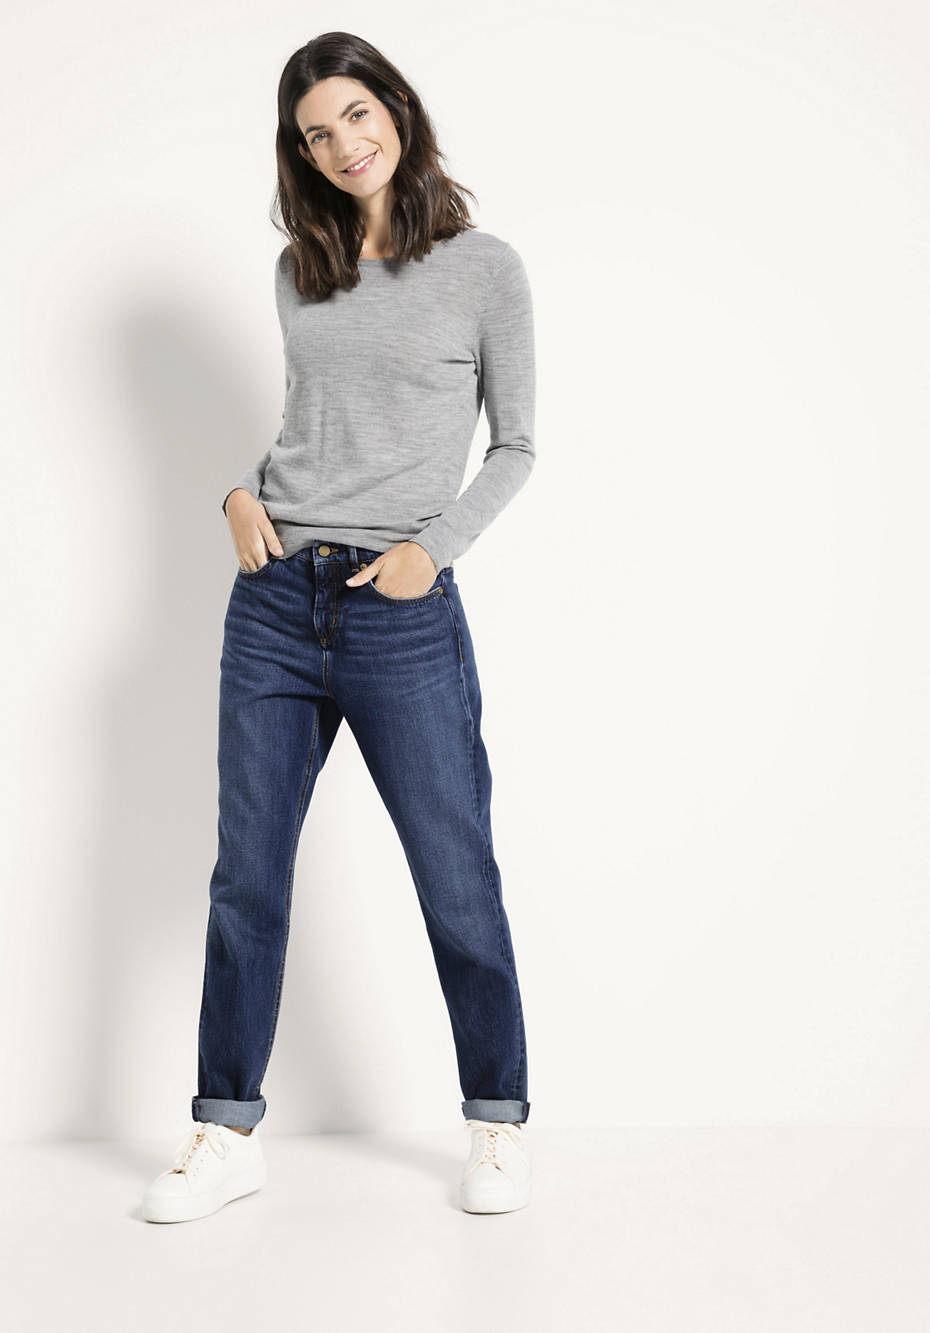 Boyfriend jeans made from pure organic denim